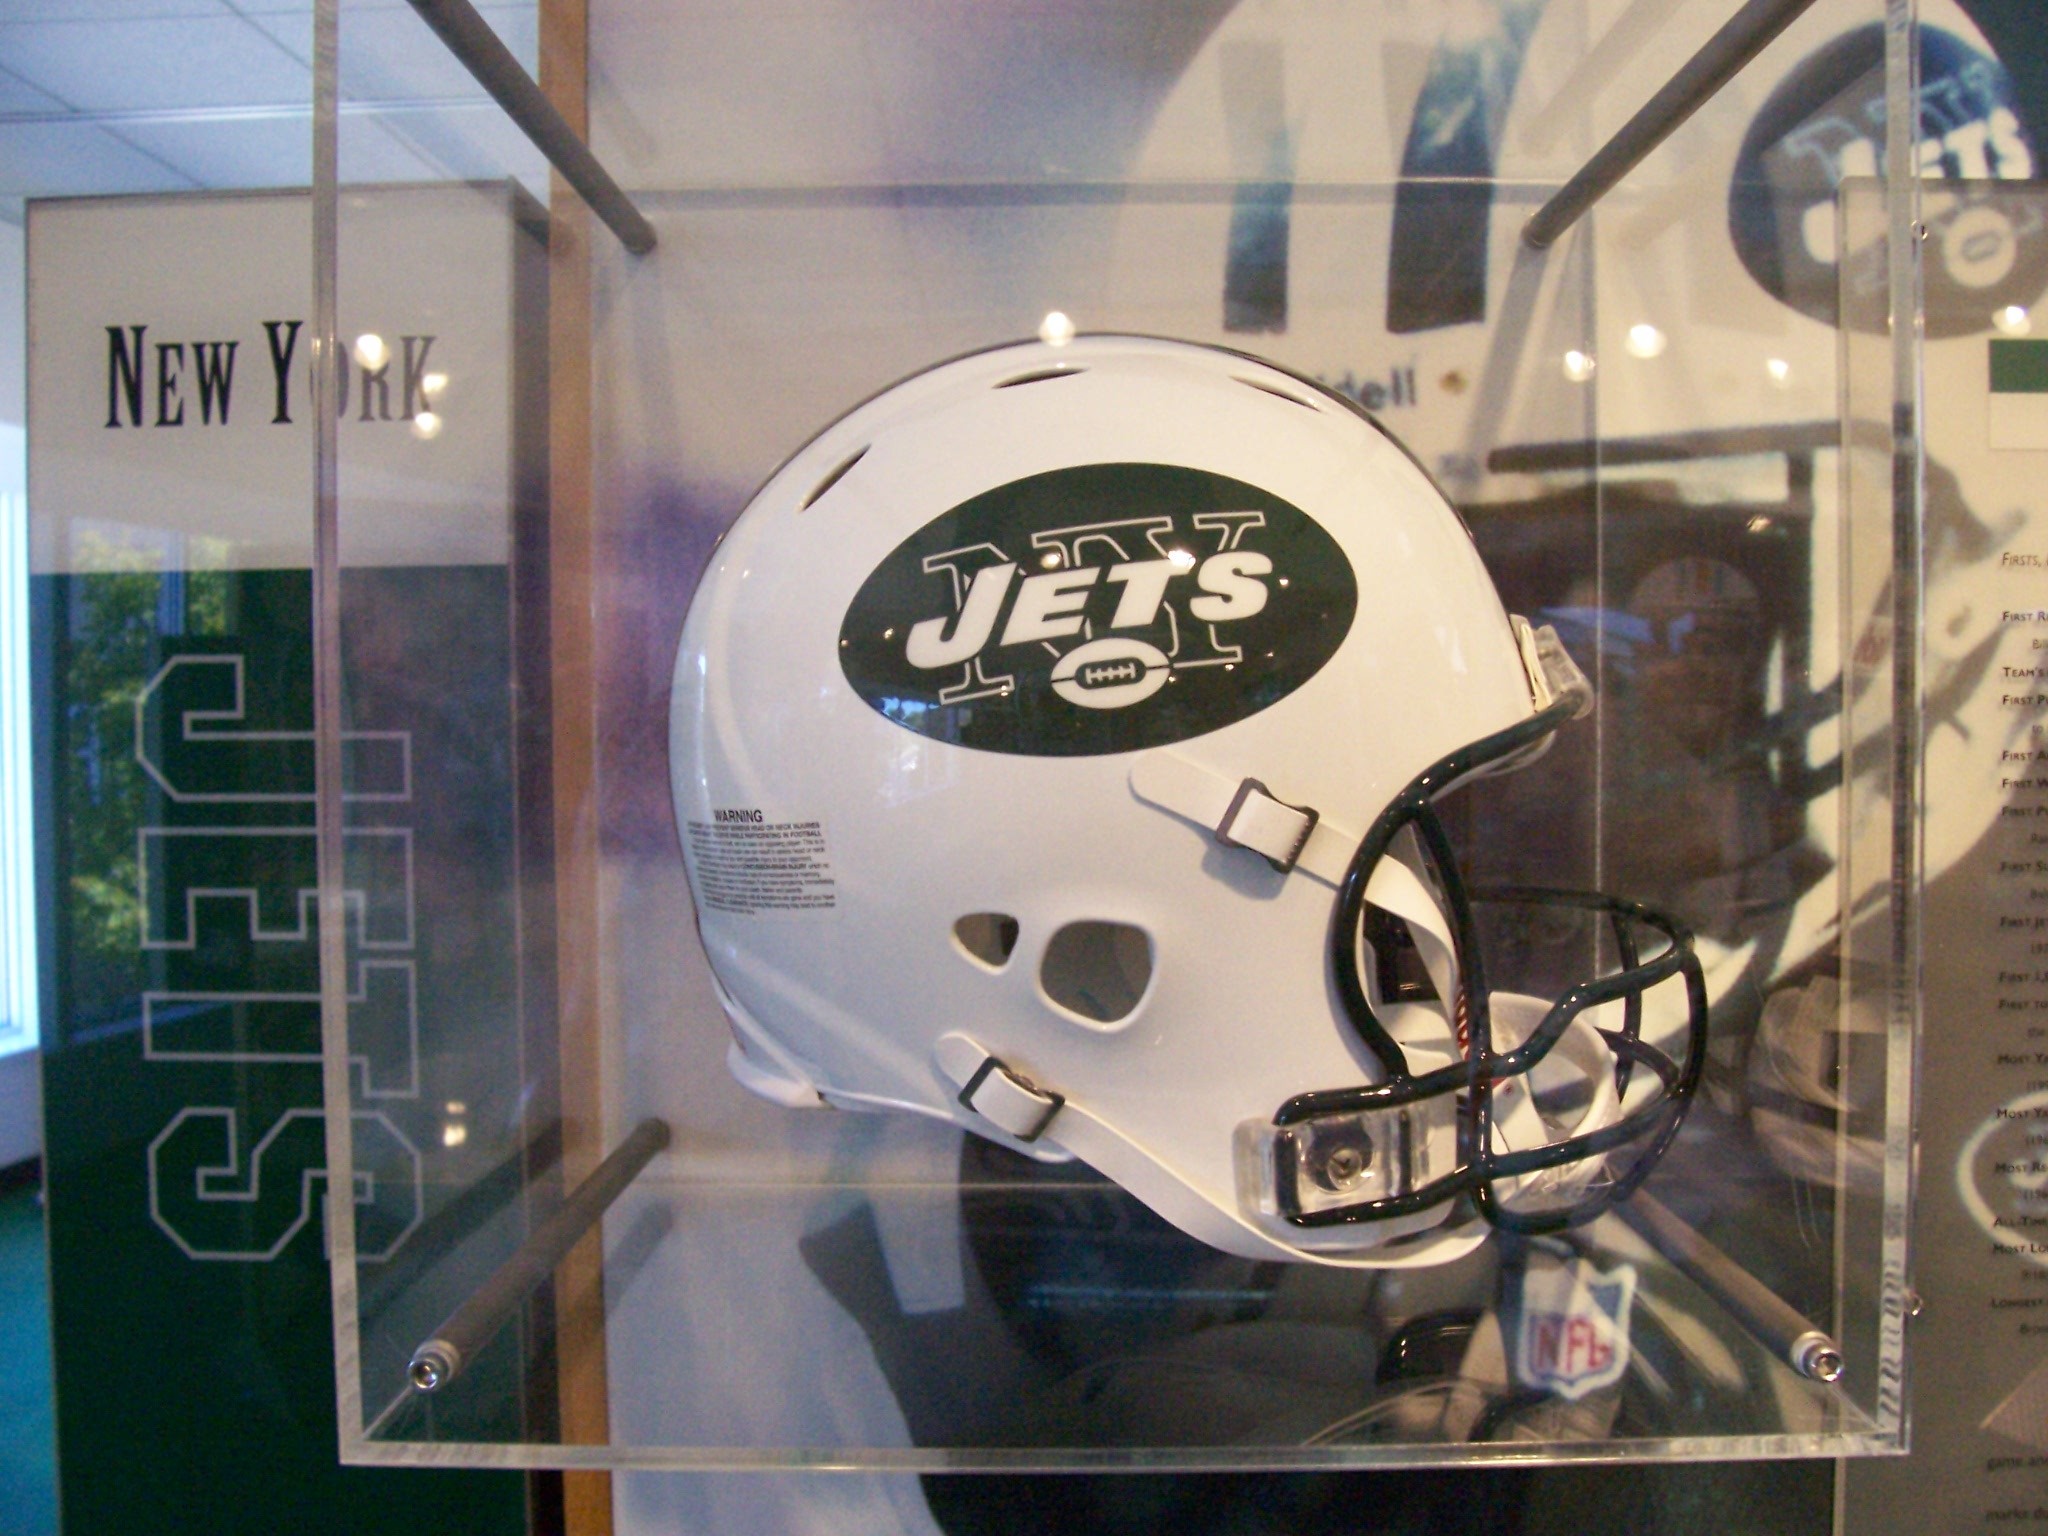 New York Jets Alternate Uniform - National Football League (NFL